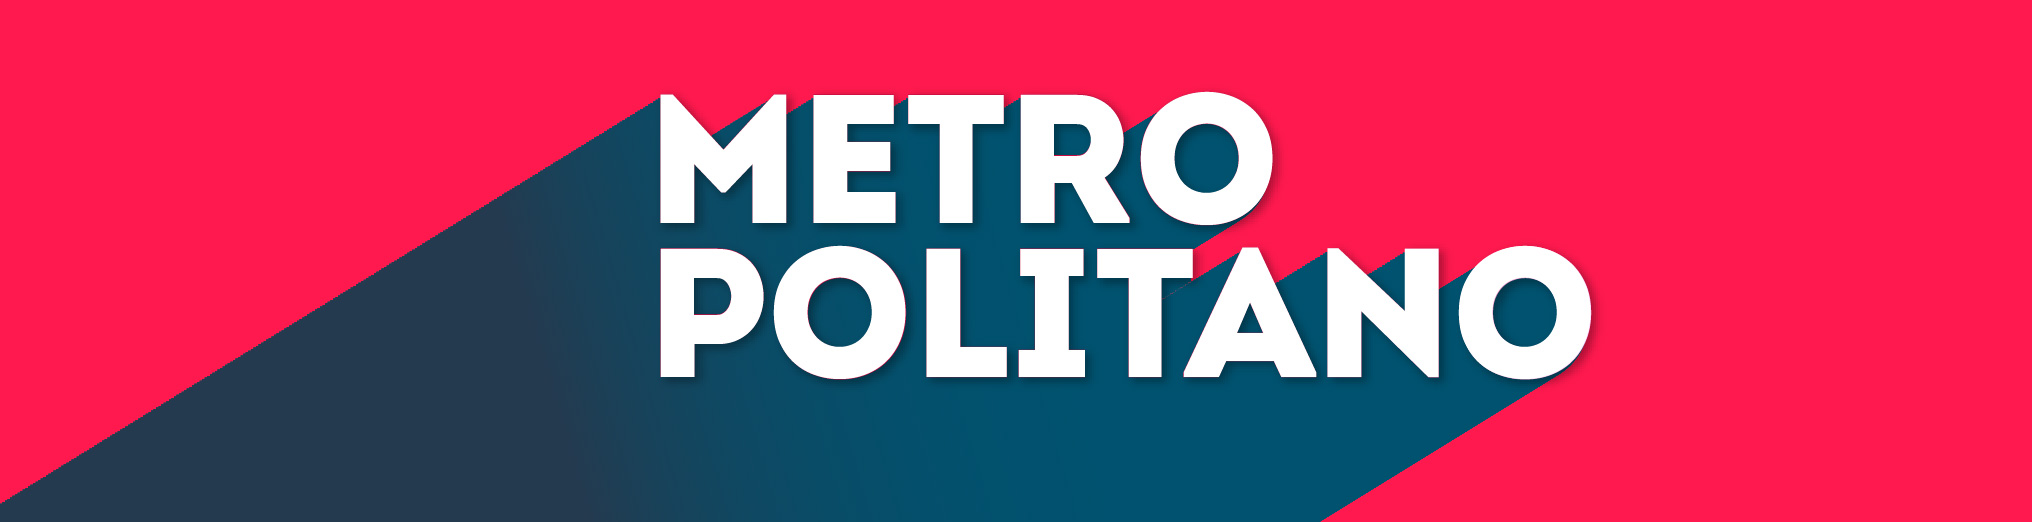 metropolitano